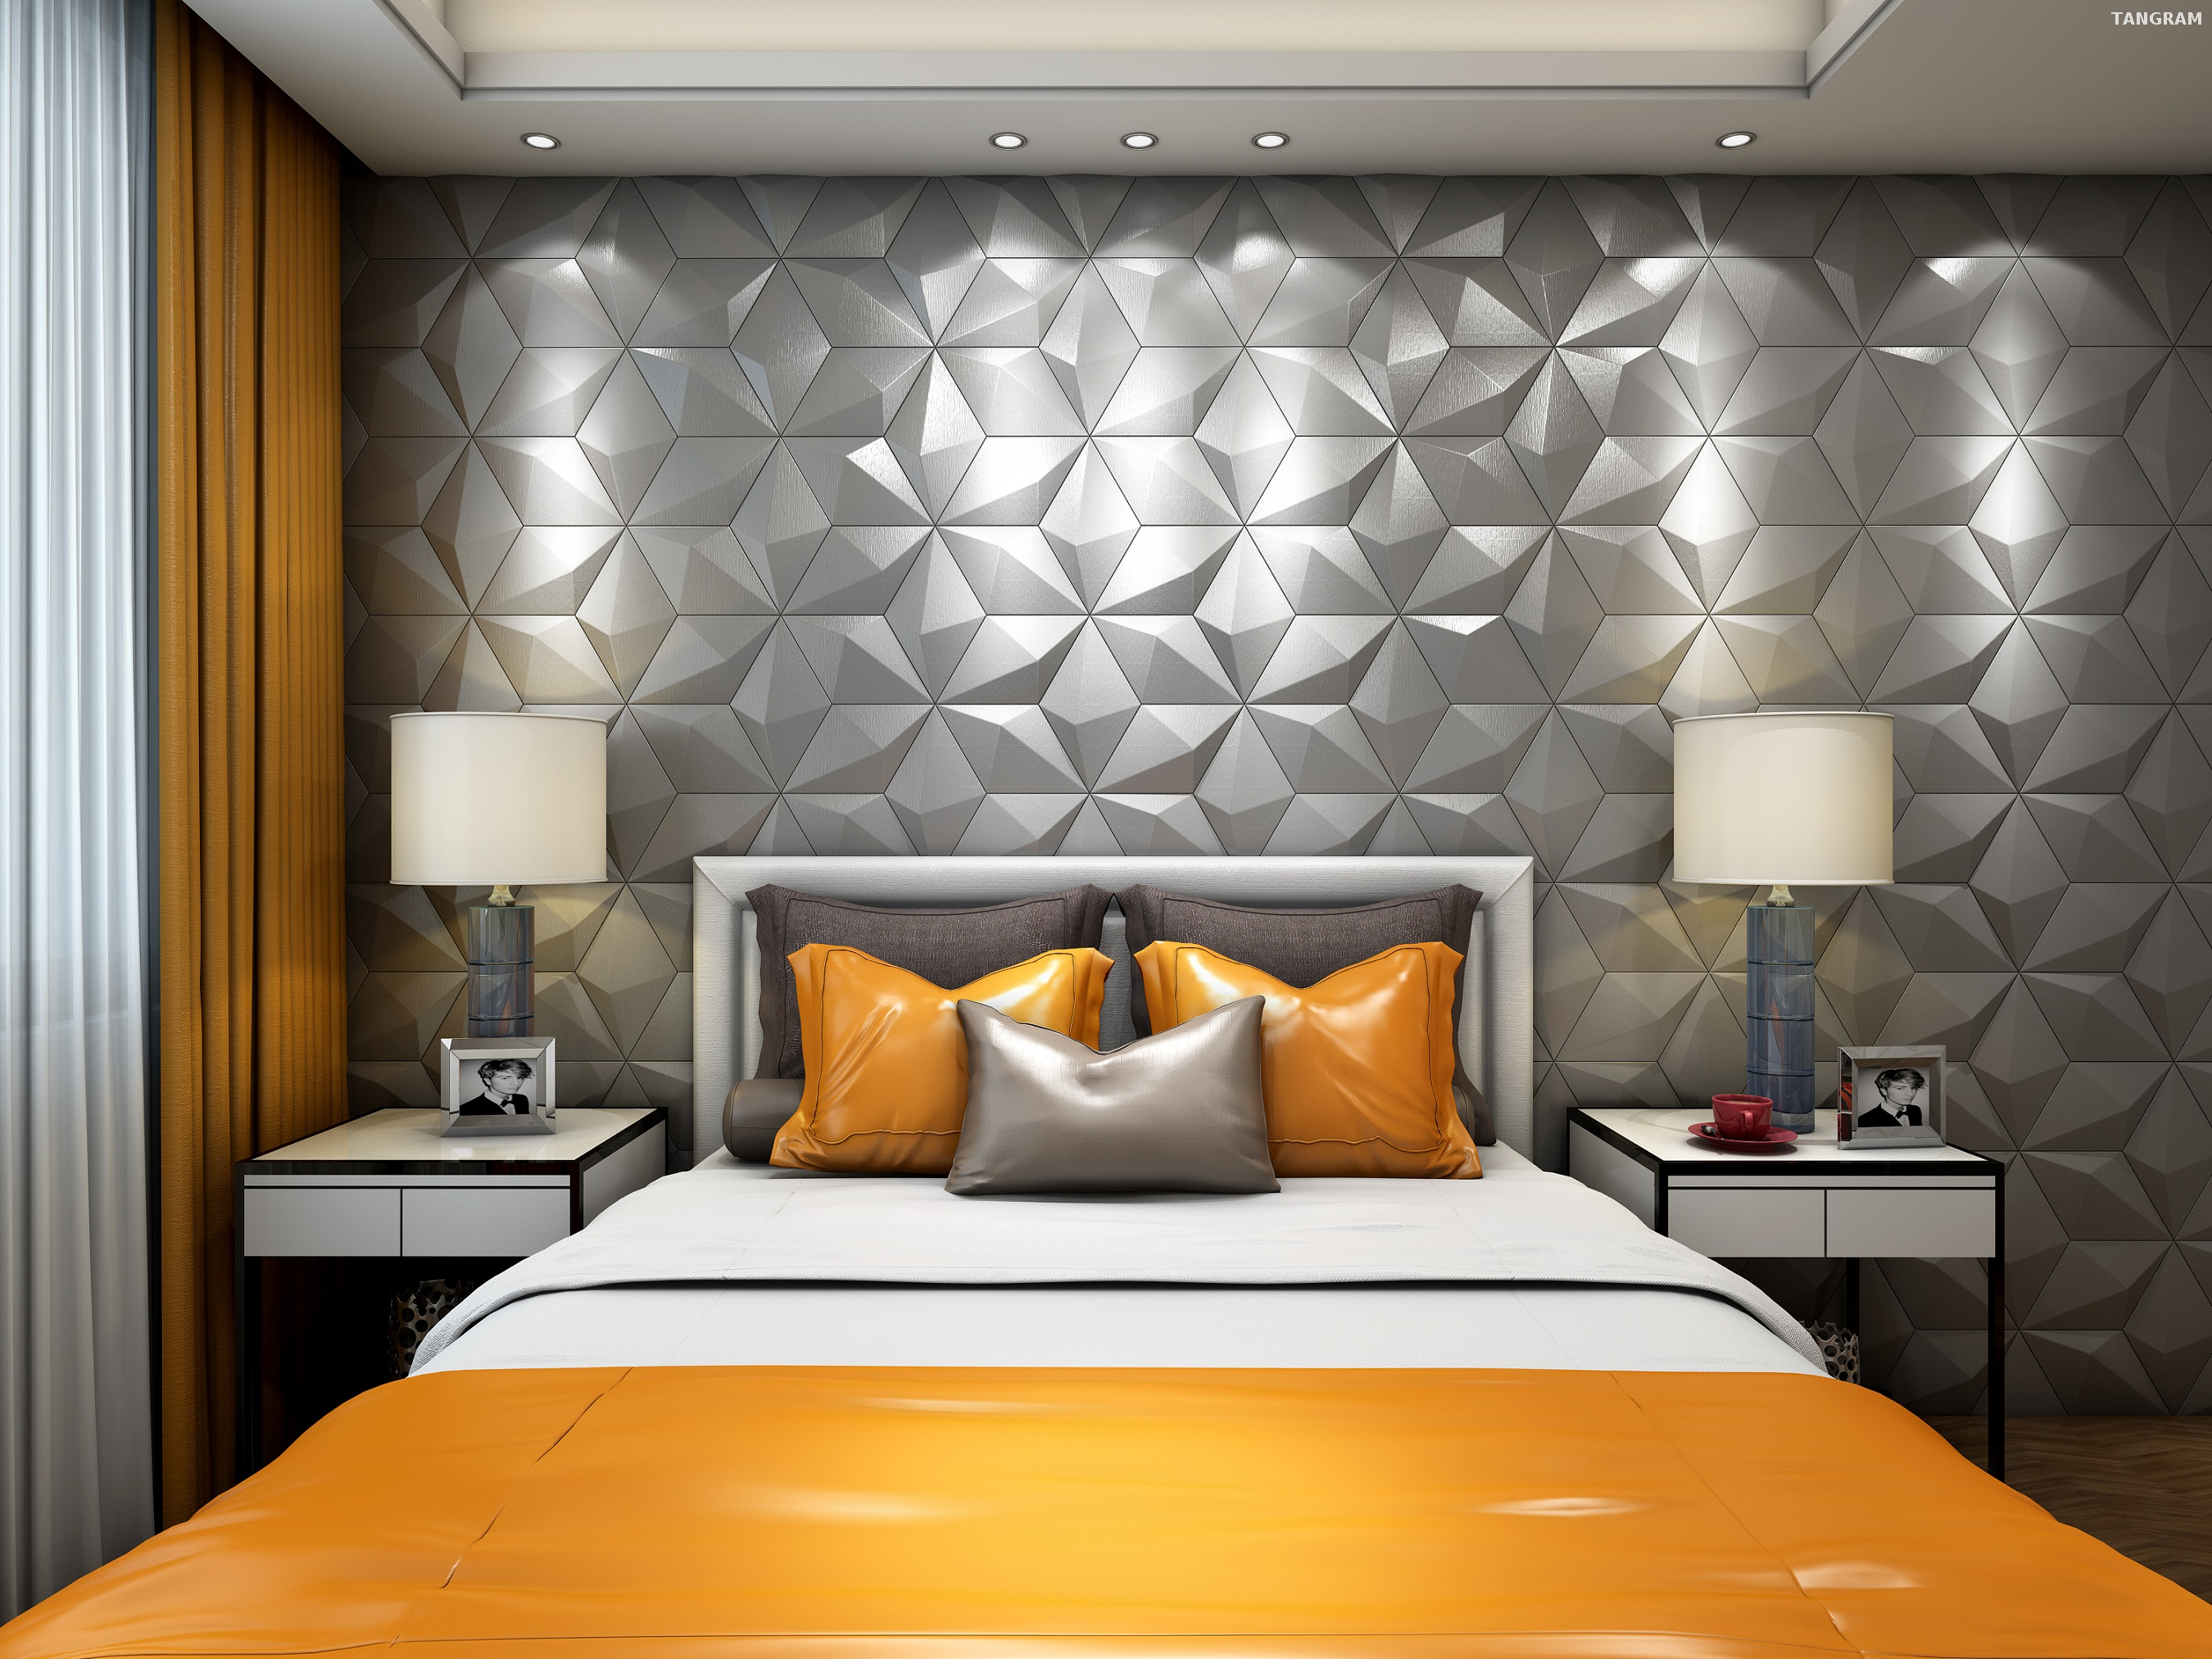 PU Leather Puteulanus Hotels Wall Online 3D